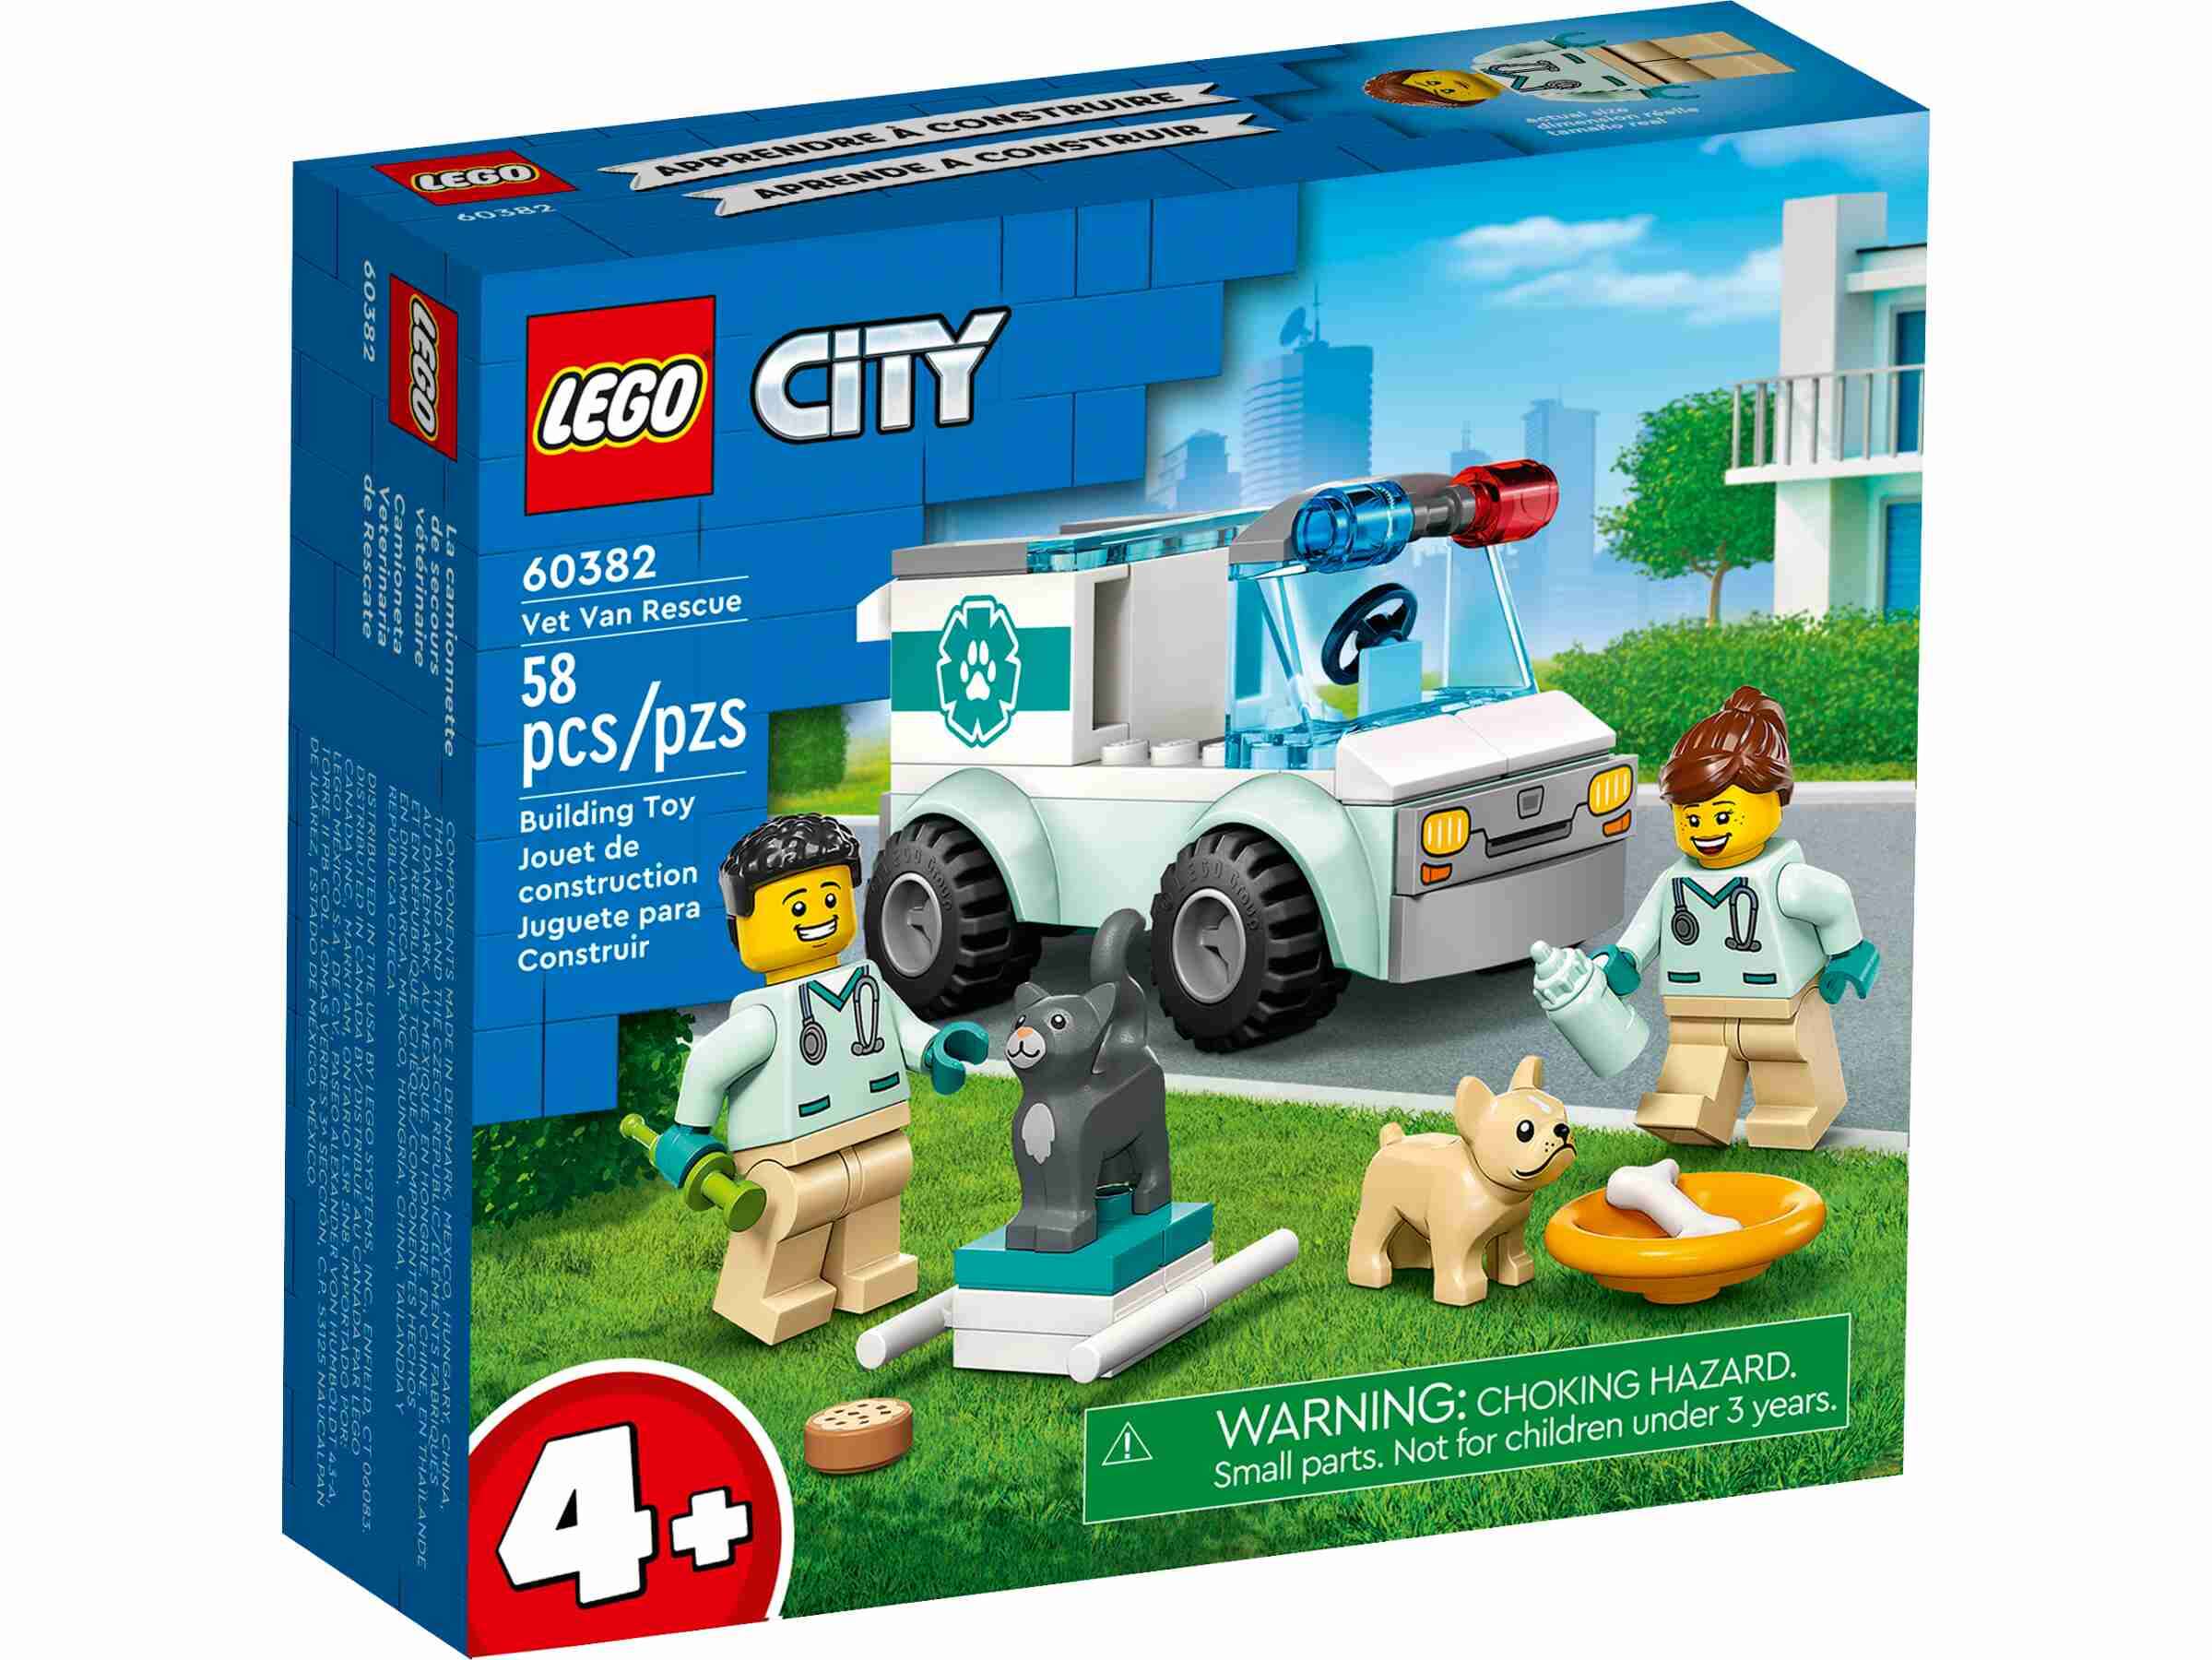 LEGO 60382 City Tierrettungswagen, 2 Tierarzt-Minifiguren, Hund, Katze